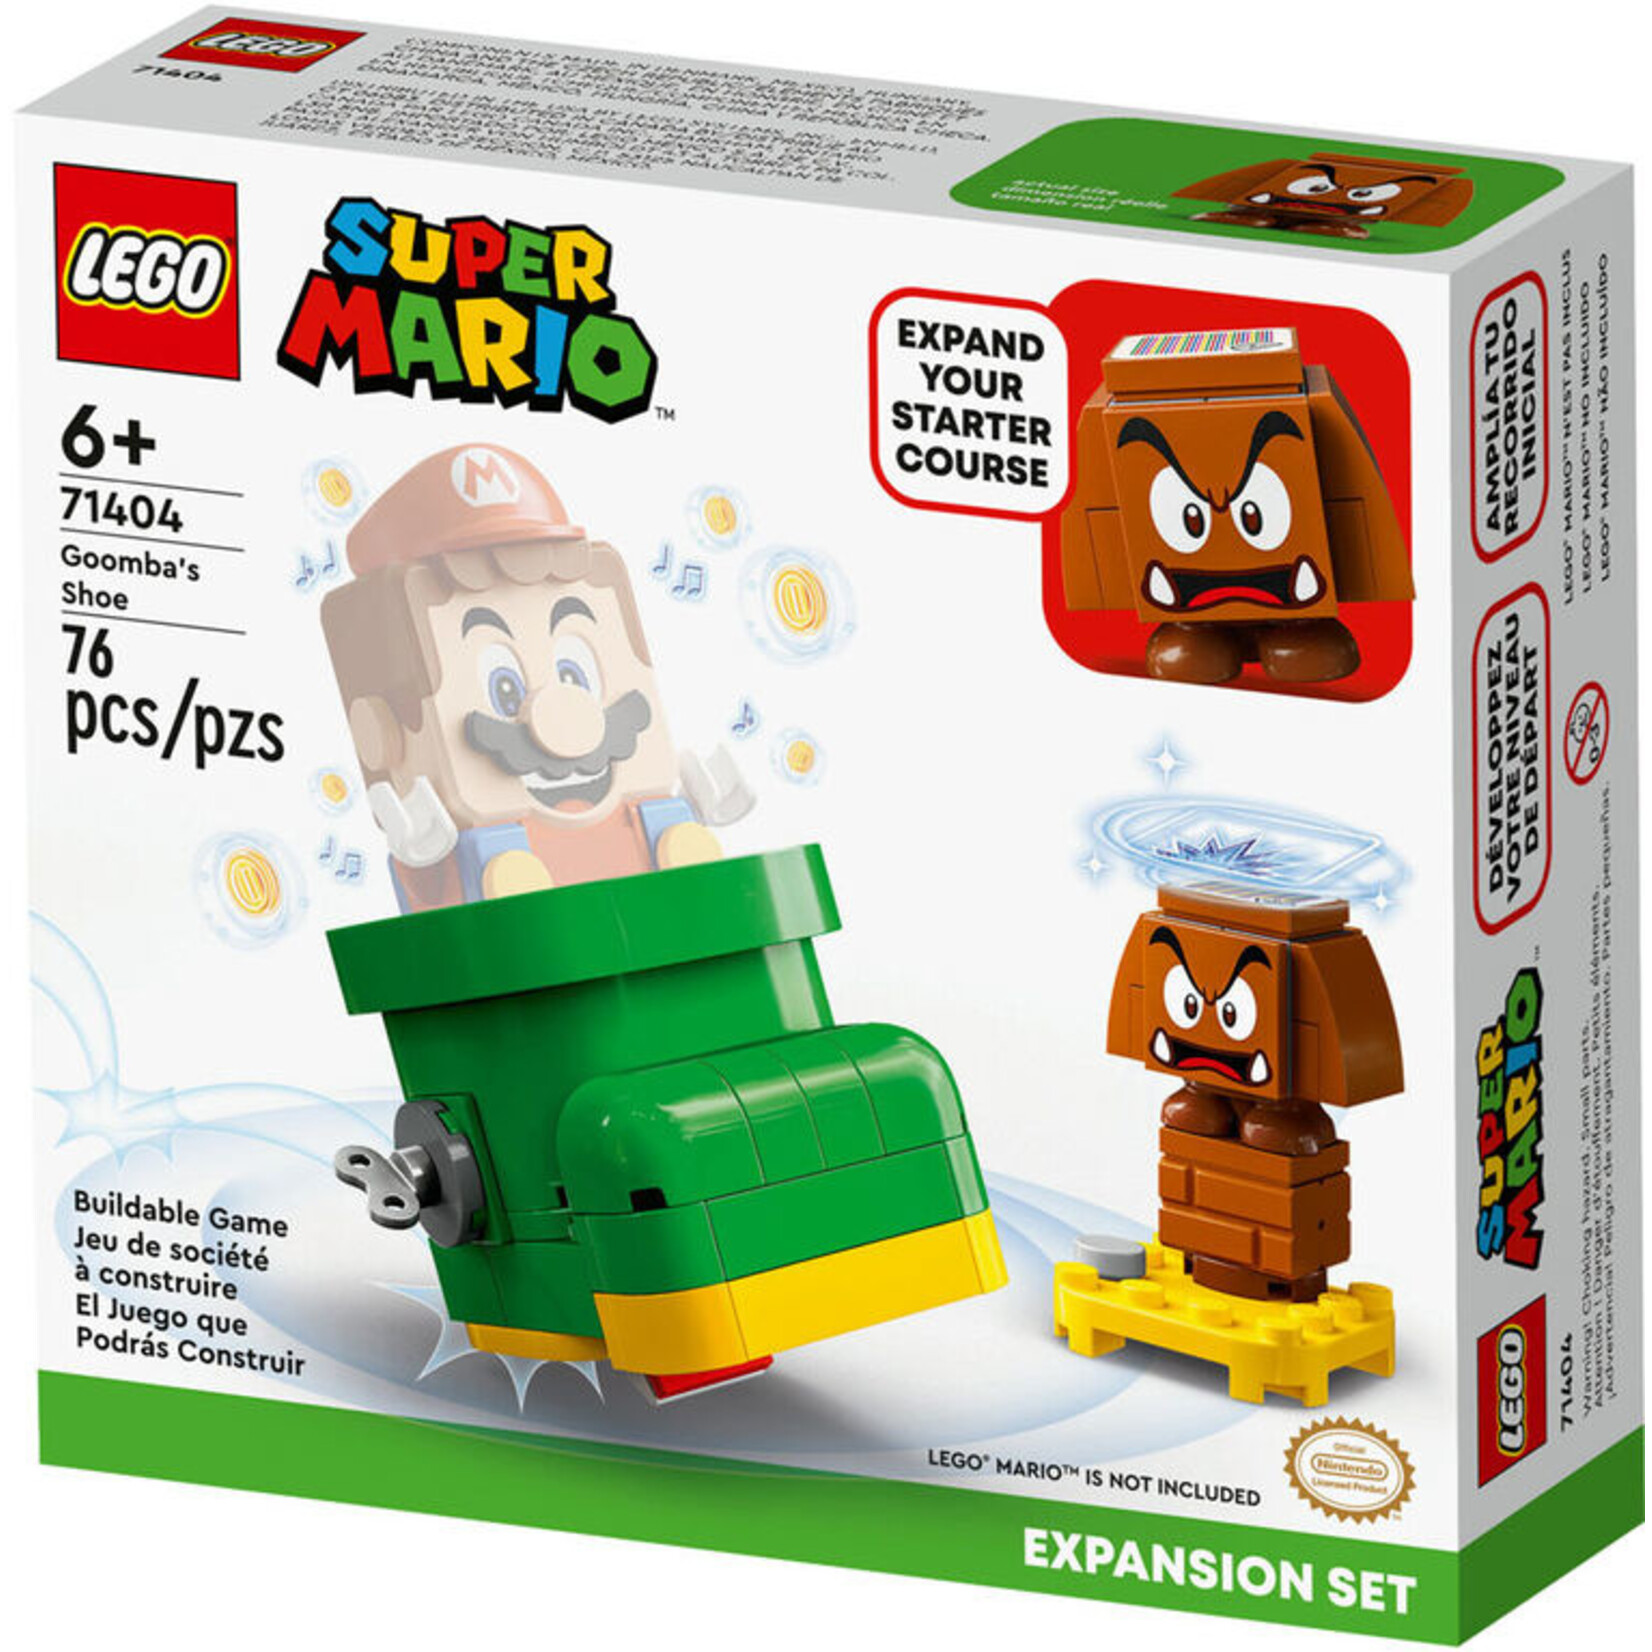 LEGO Super Mario Goomba’s Shoe Expansion Set